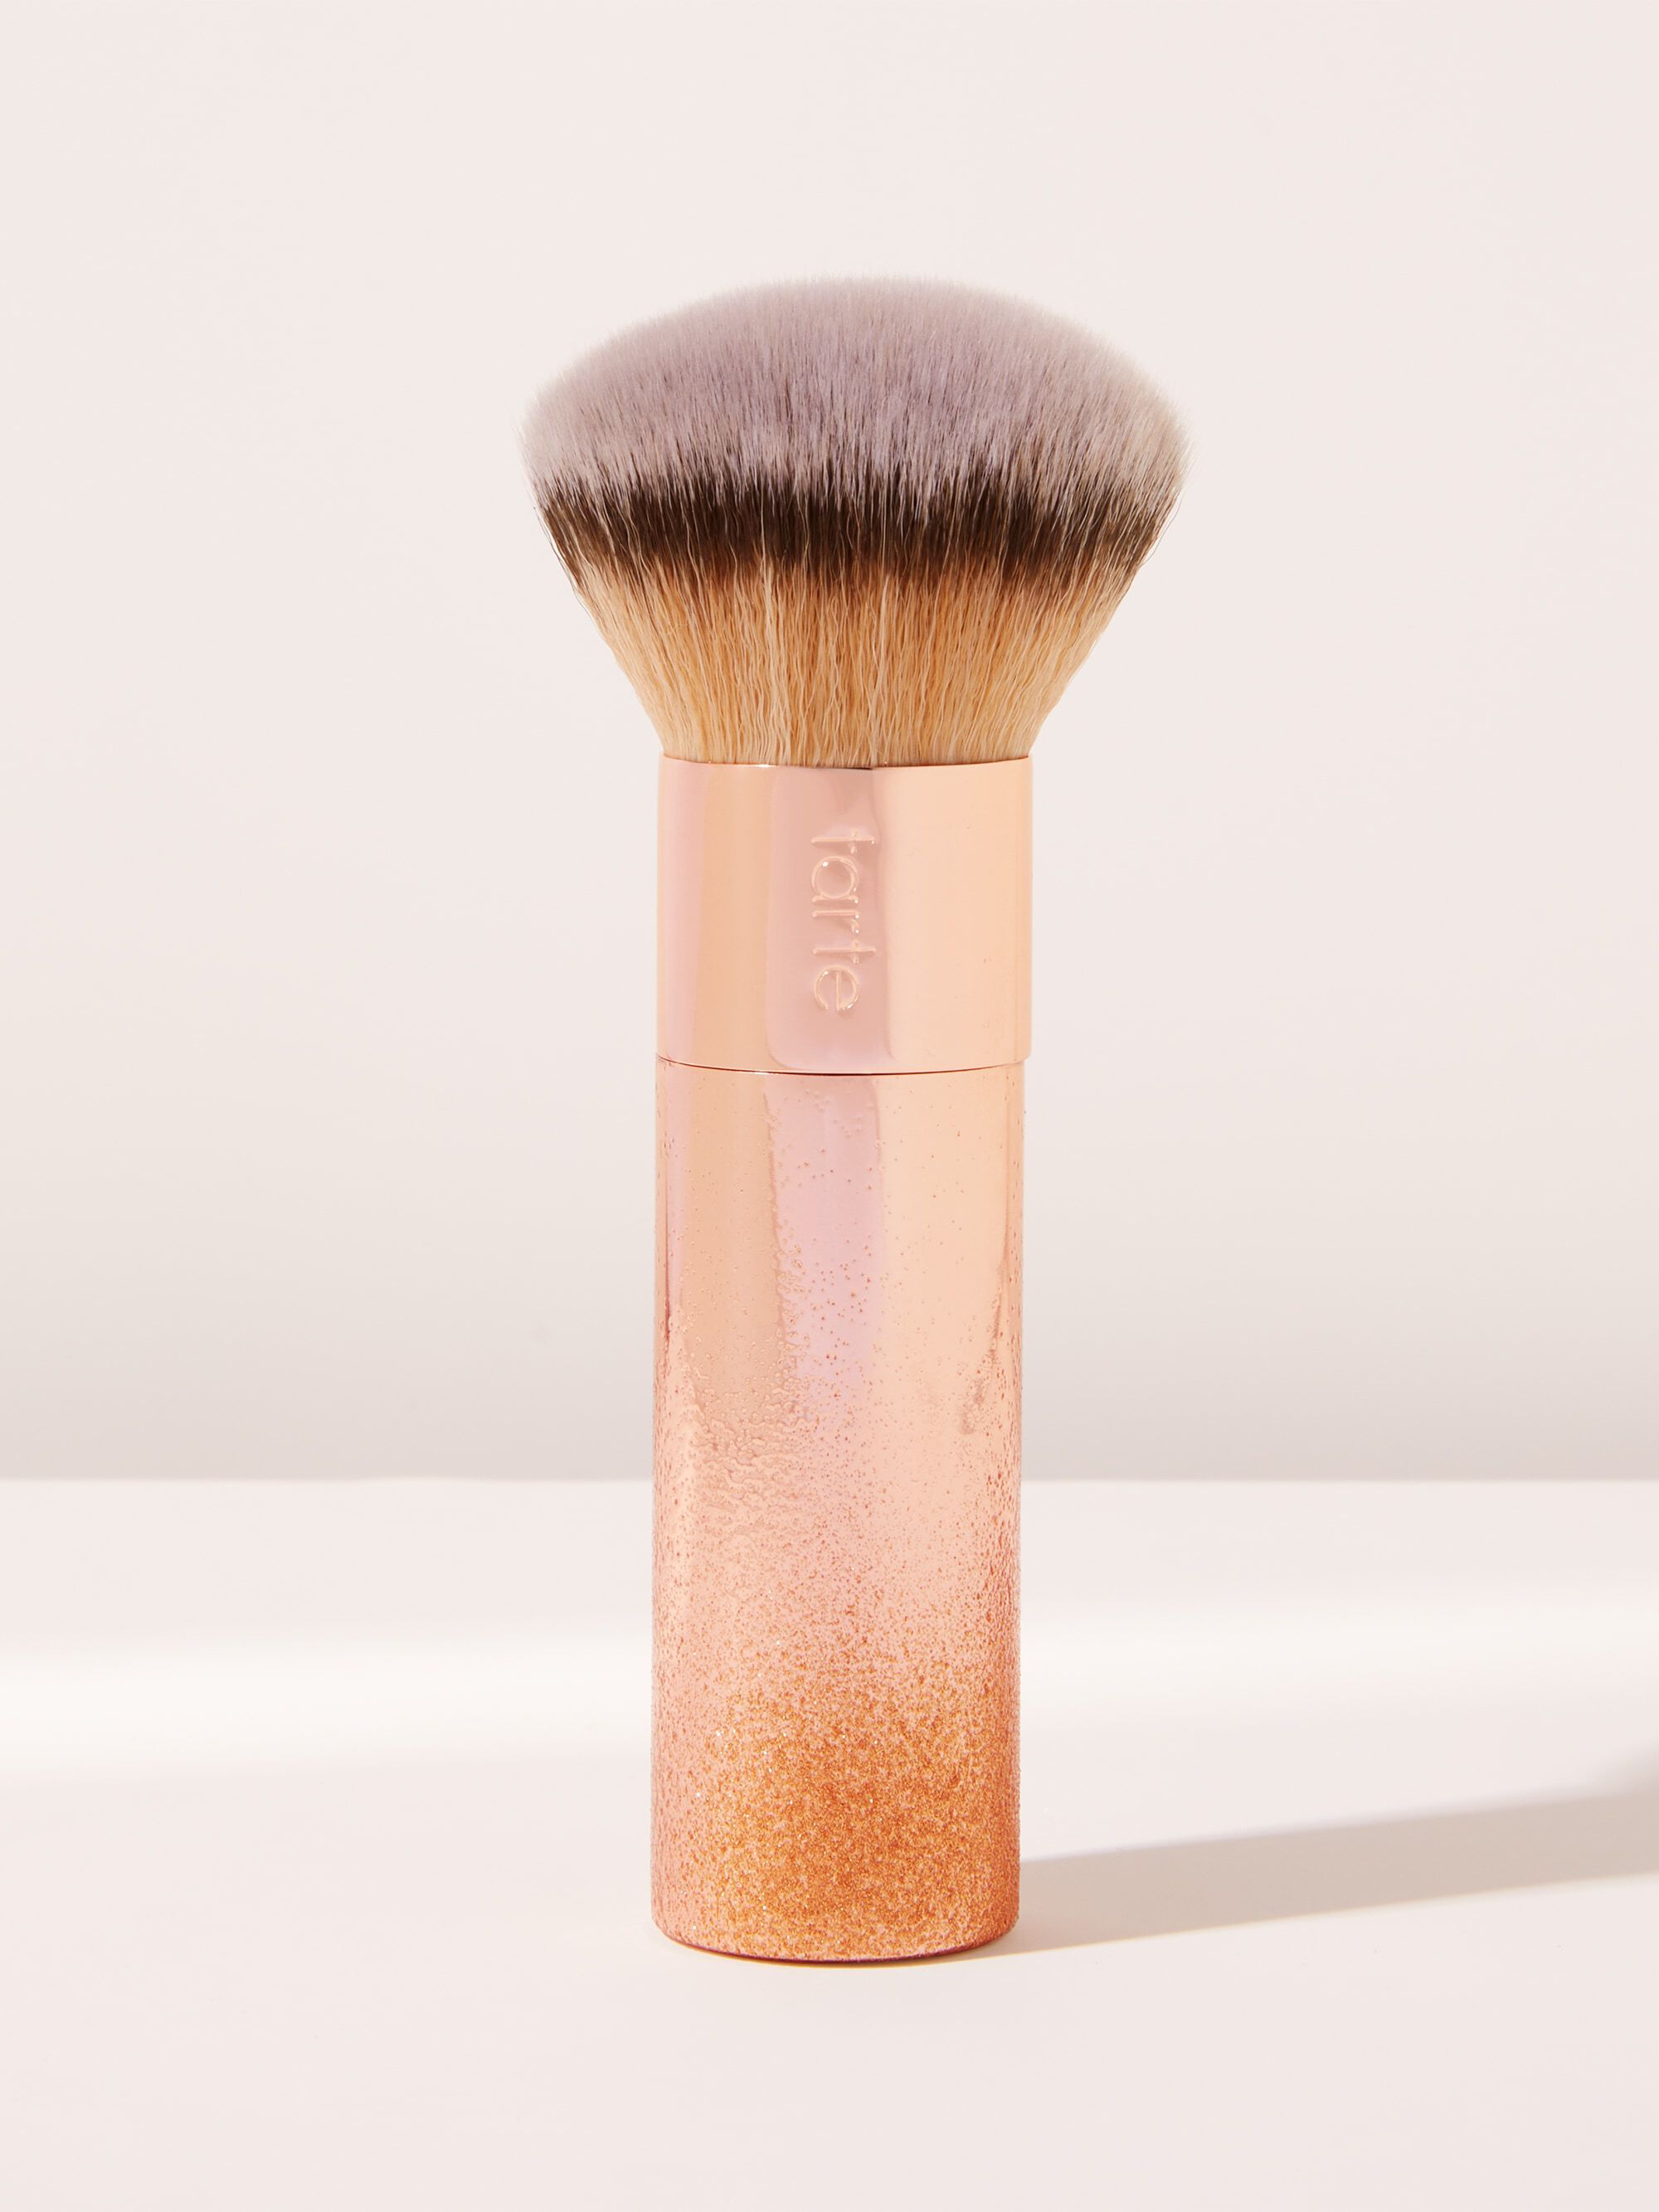 limited-edition the buffer airbrush finish foundation brush | tarte cosmetics (US)